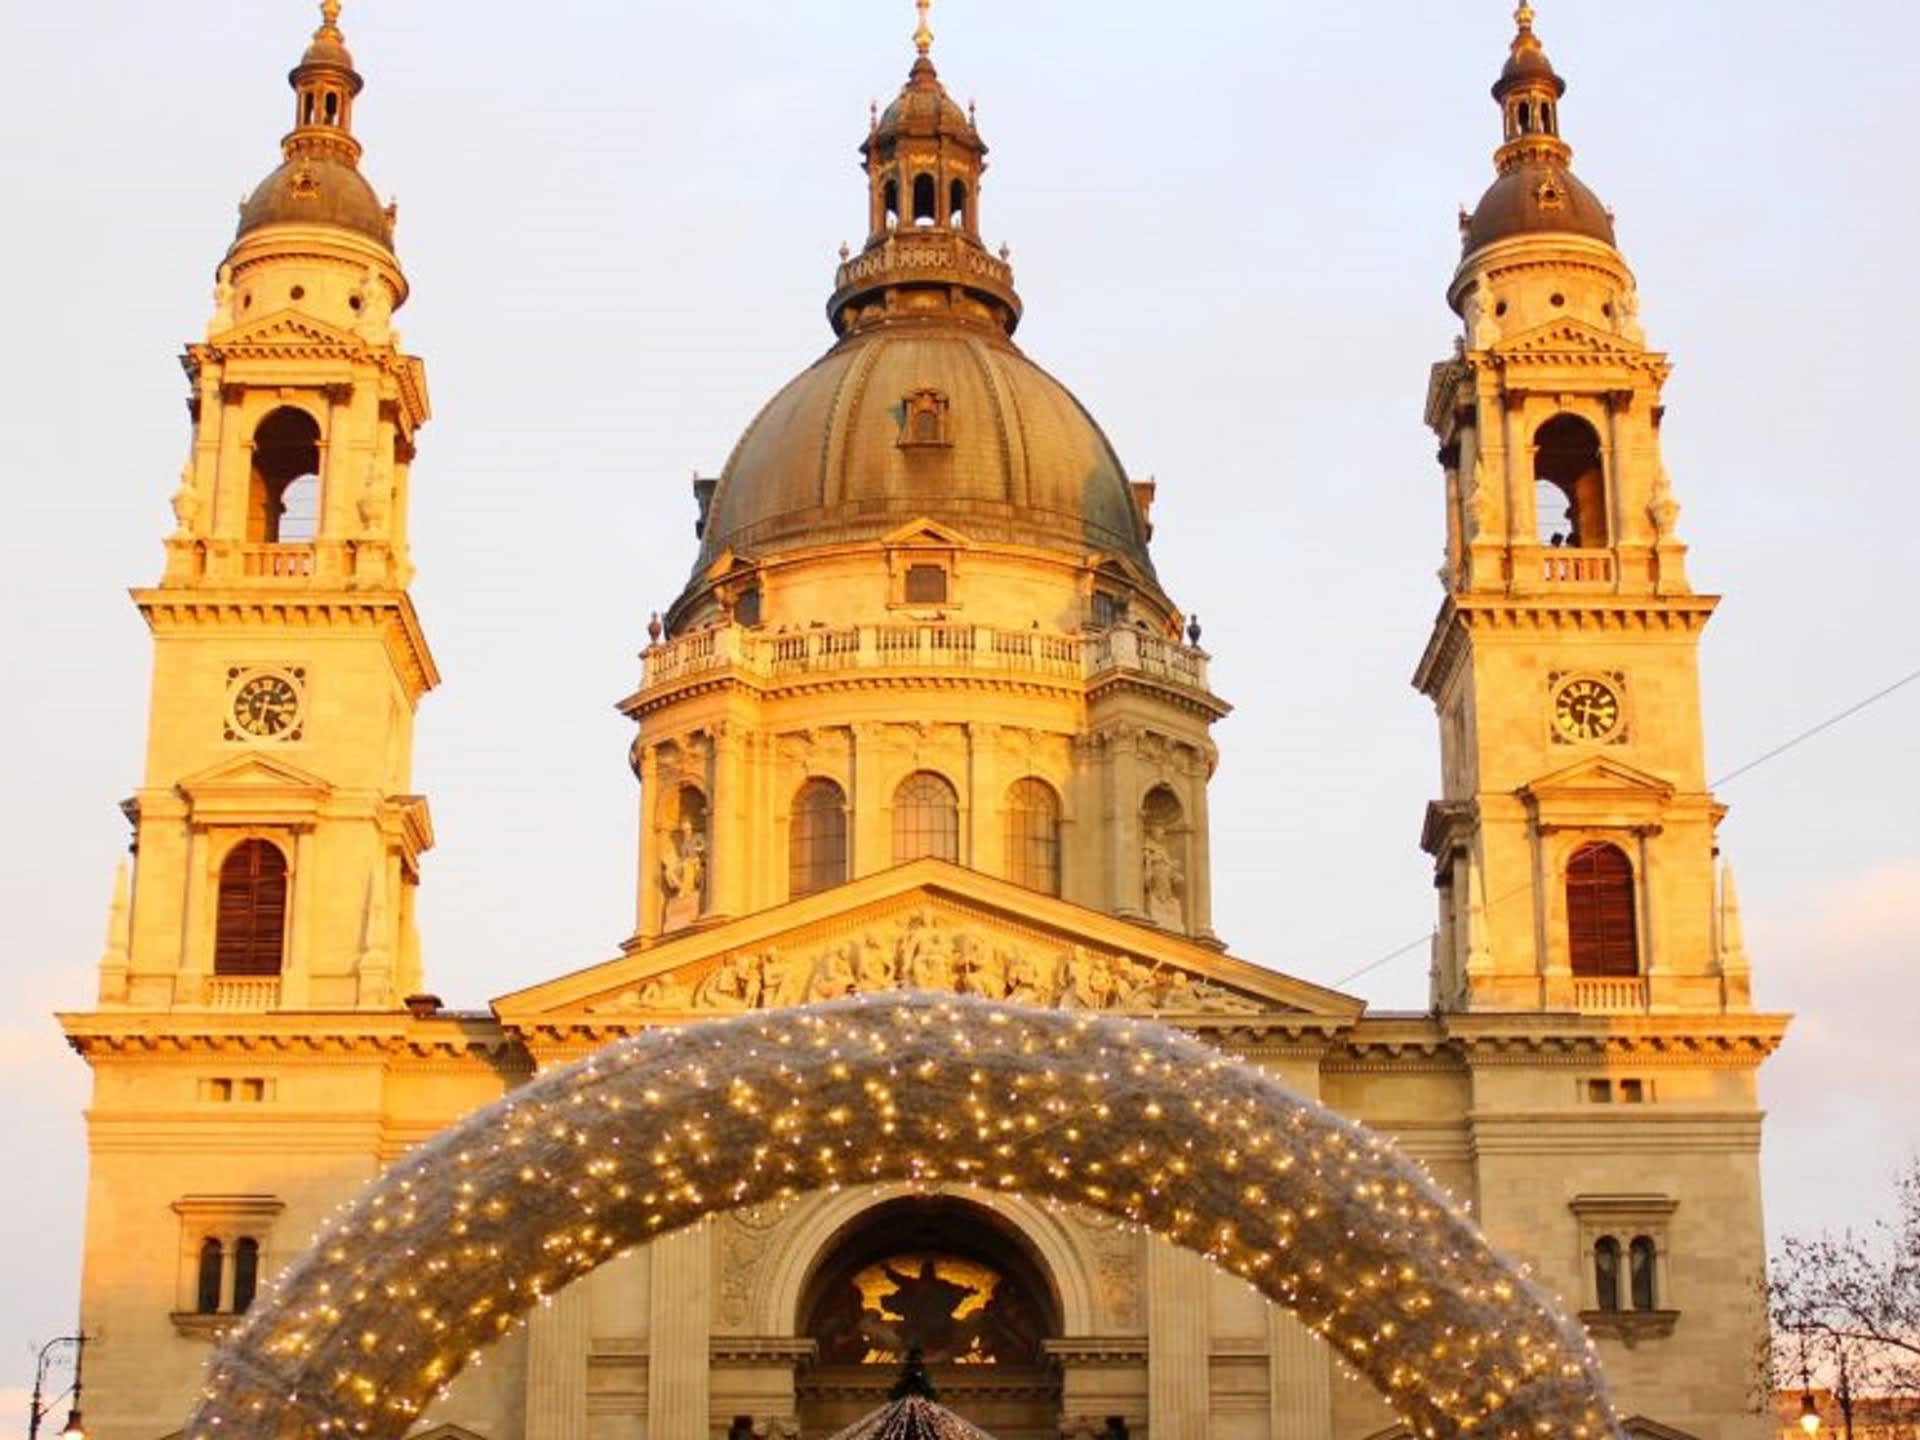 Budapest Christmas Market Tour with Basilica Visit